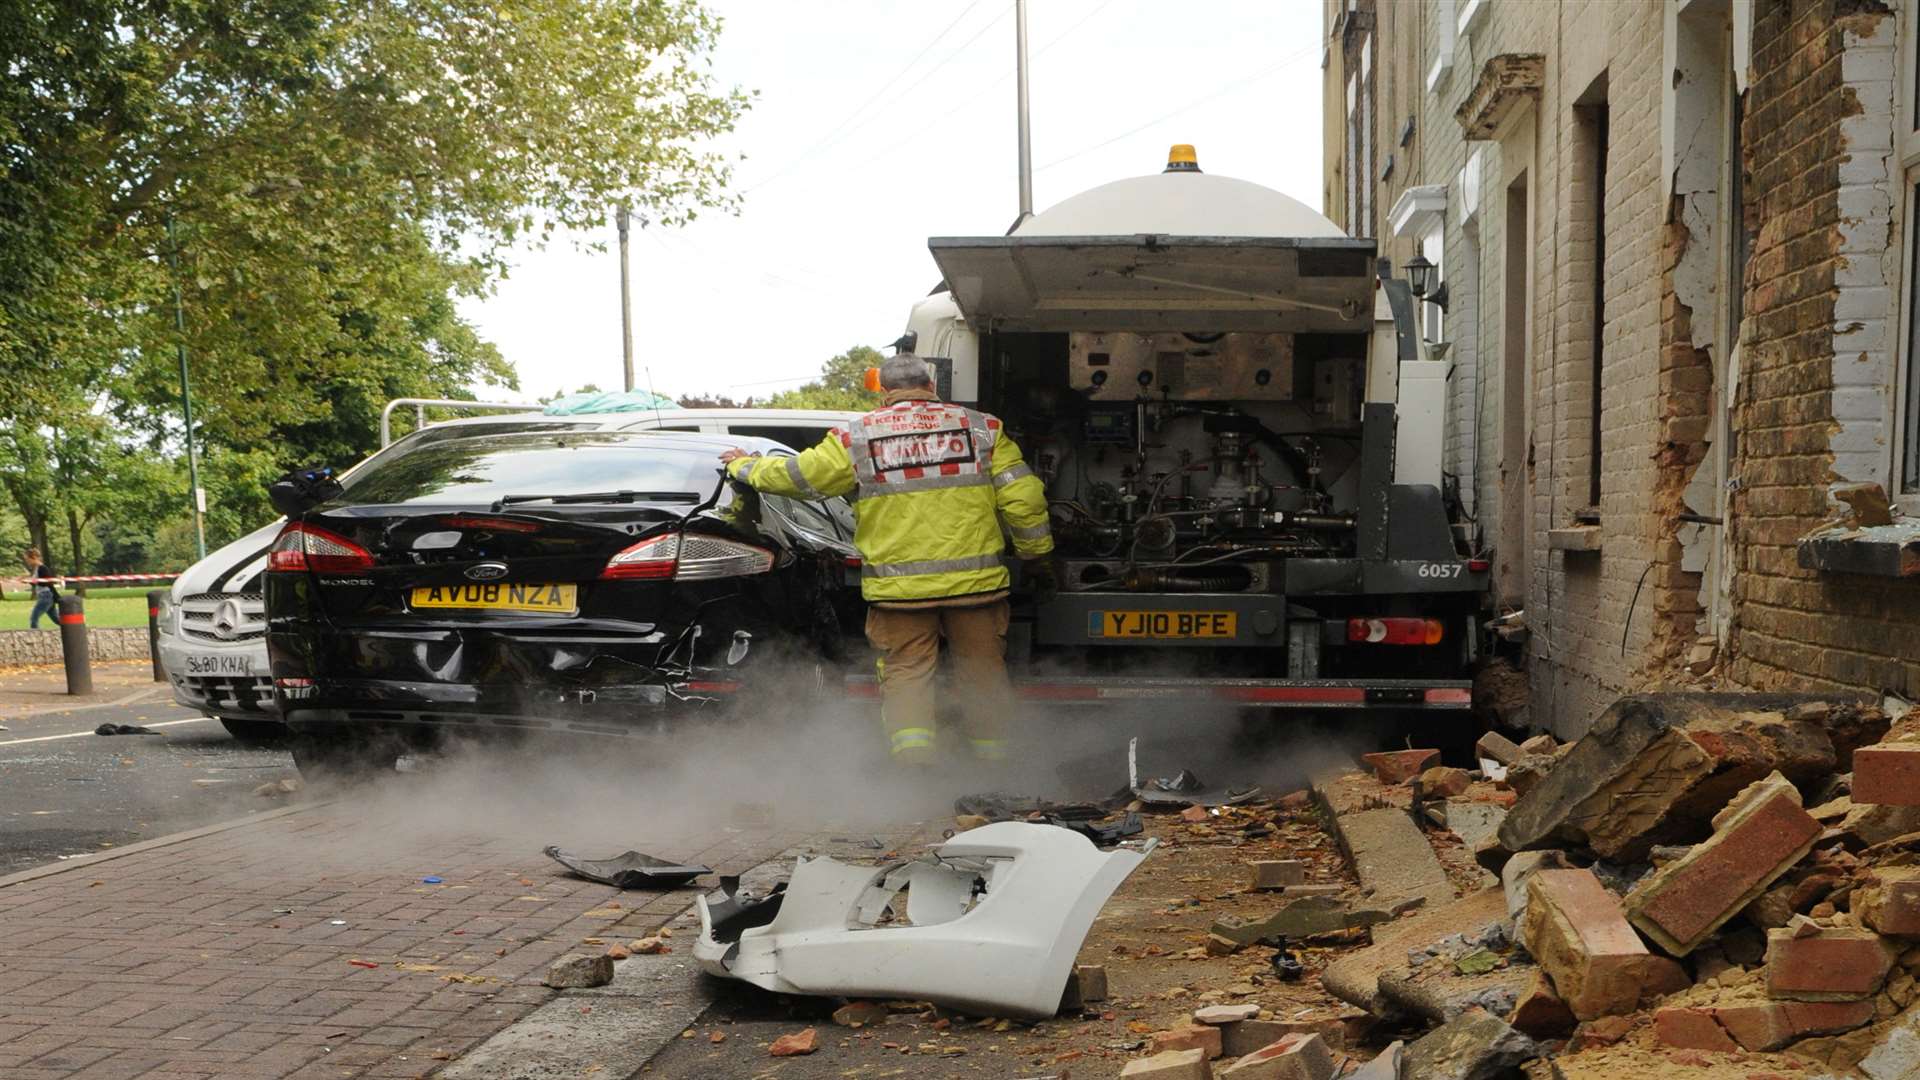 The scene of the crash in Marlborough Road